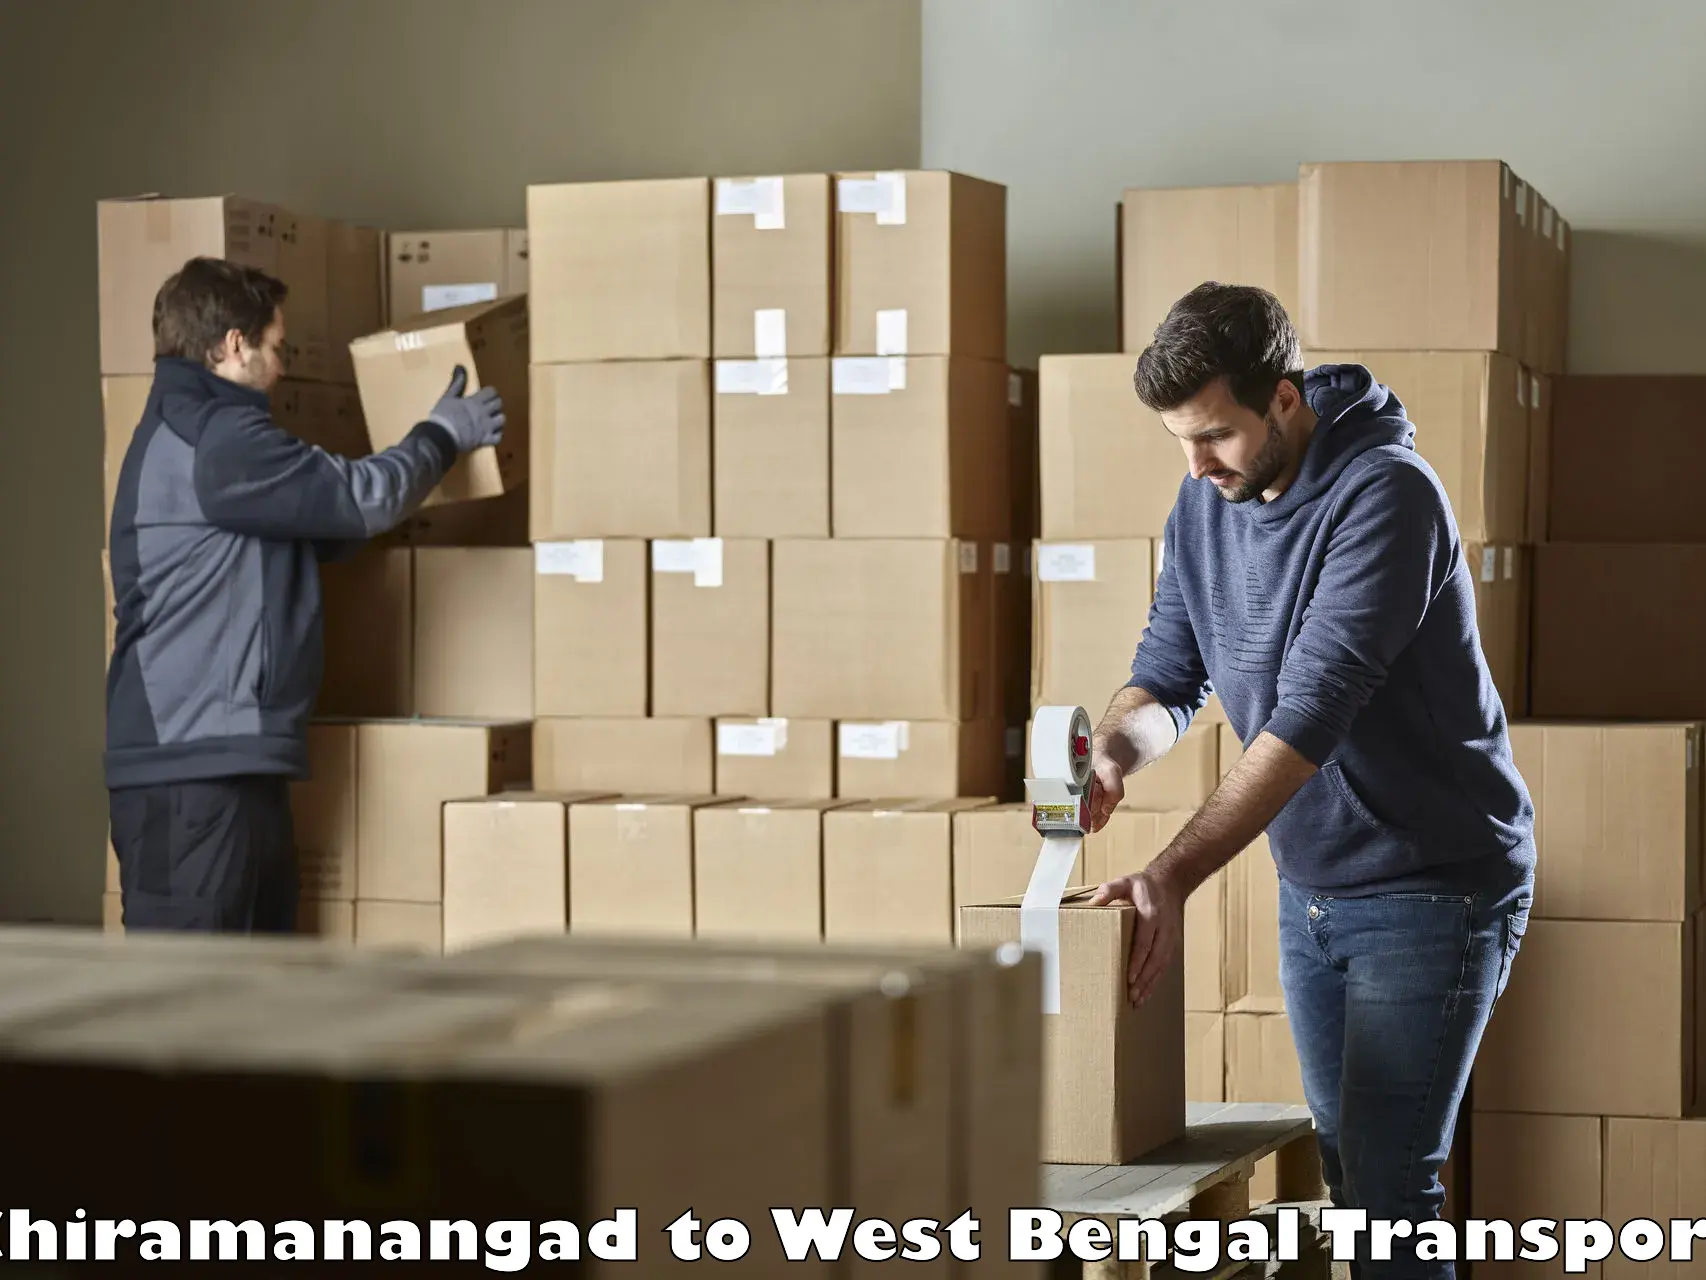 Domestic goods transportation services Chiramanangad to Kolkata Port